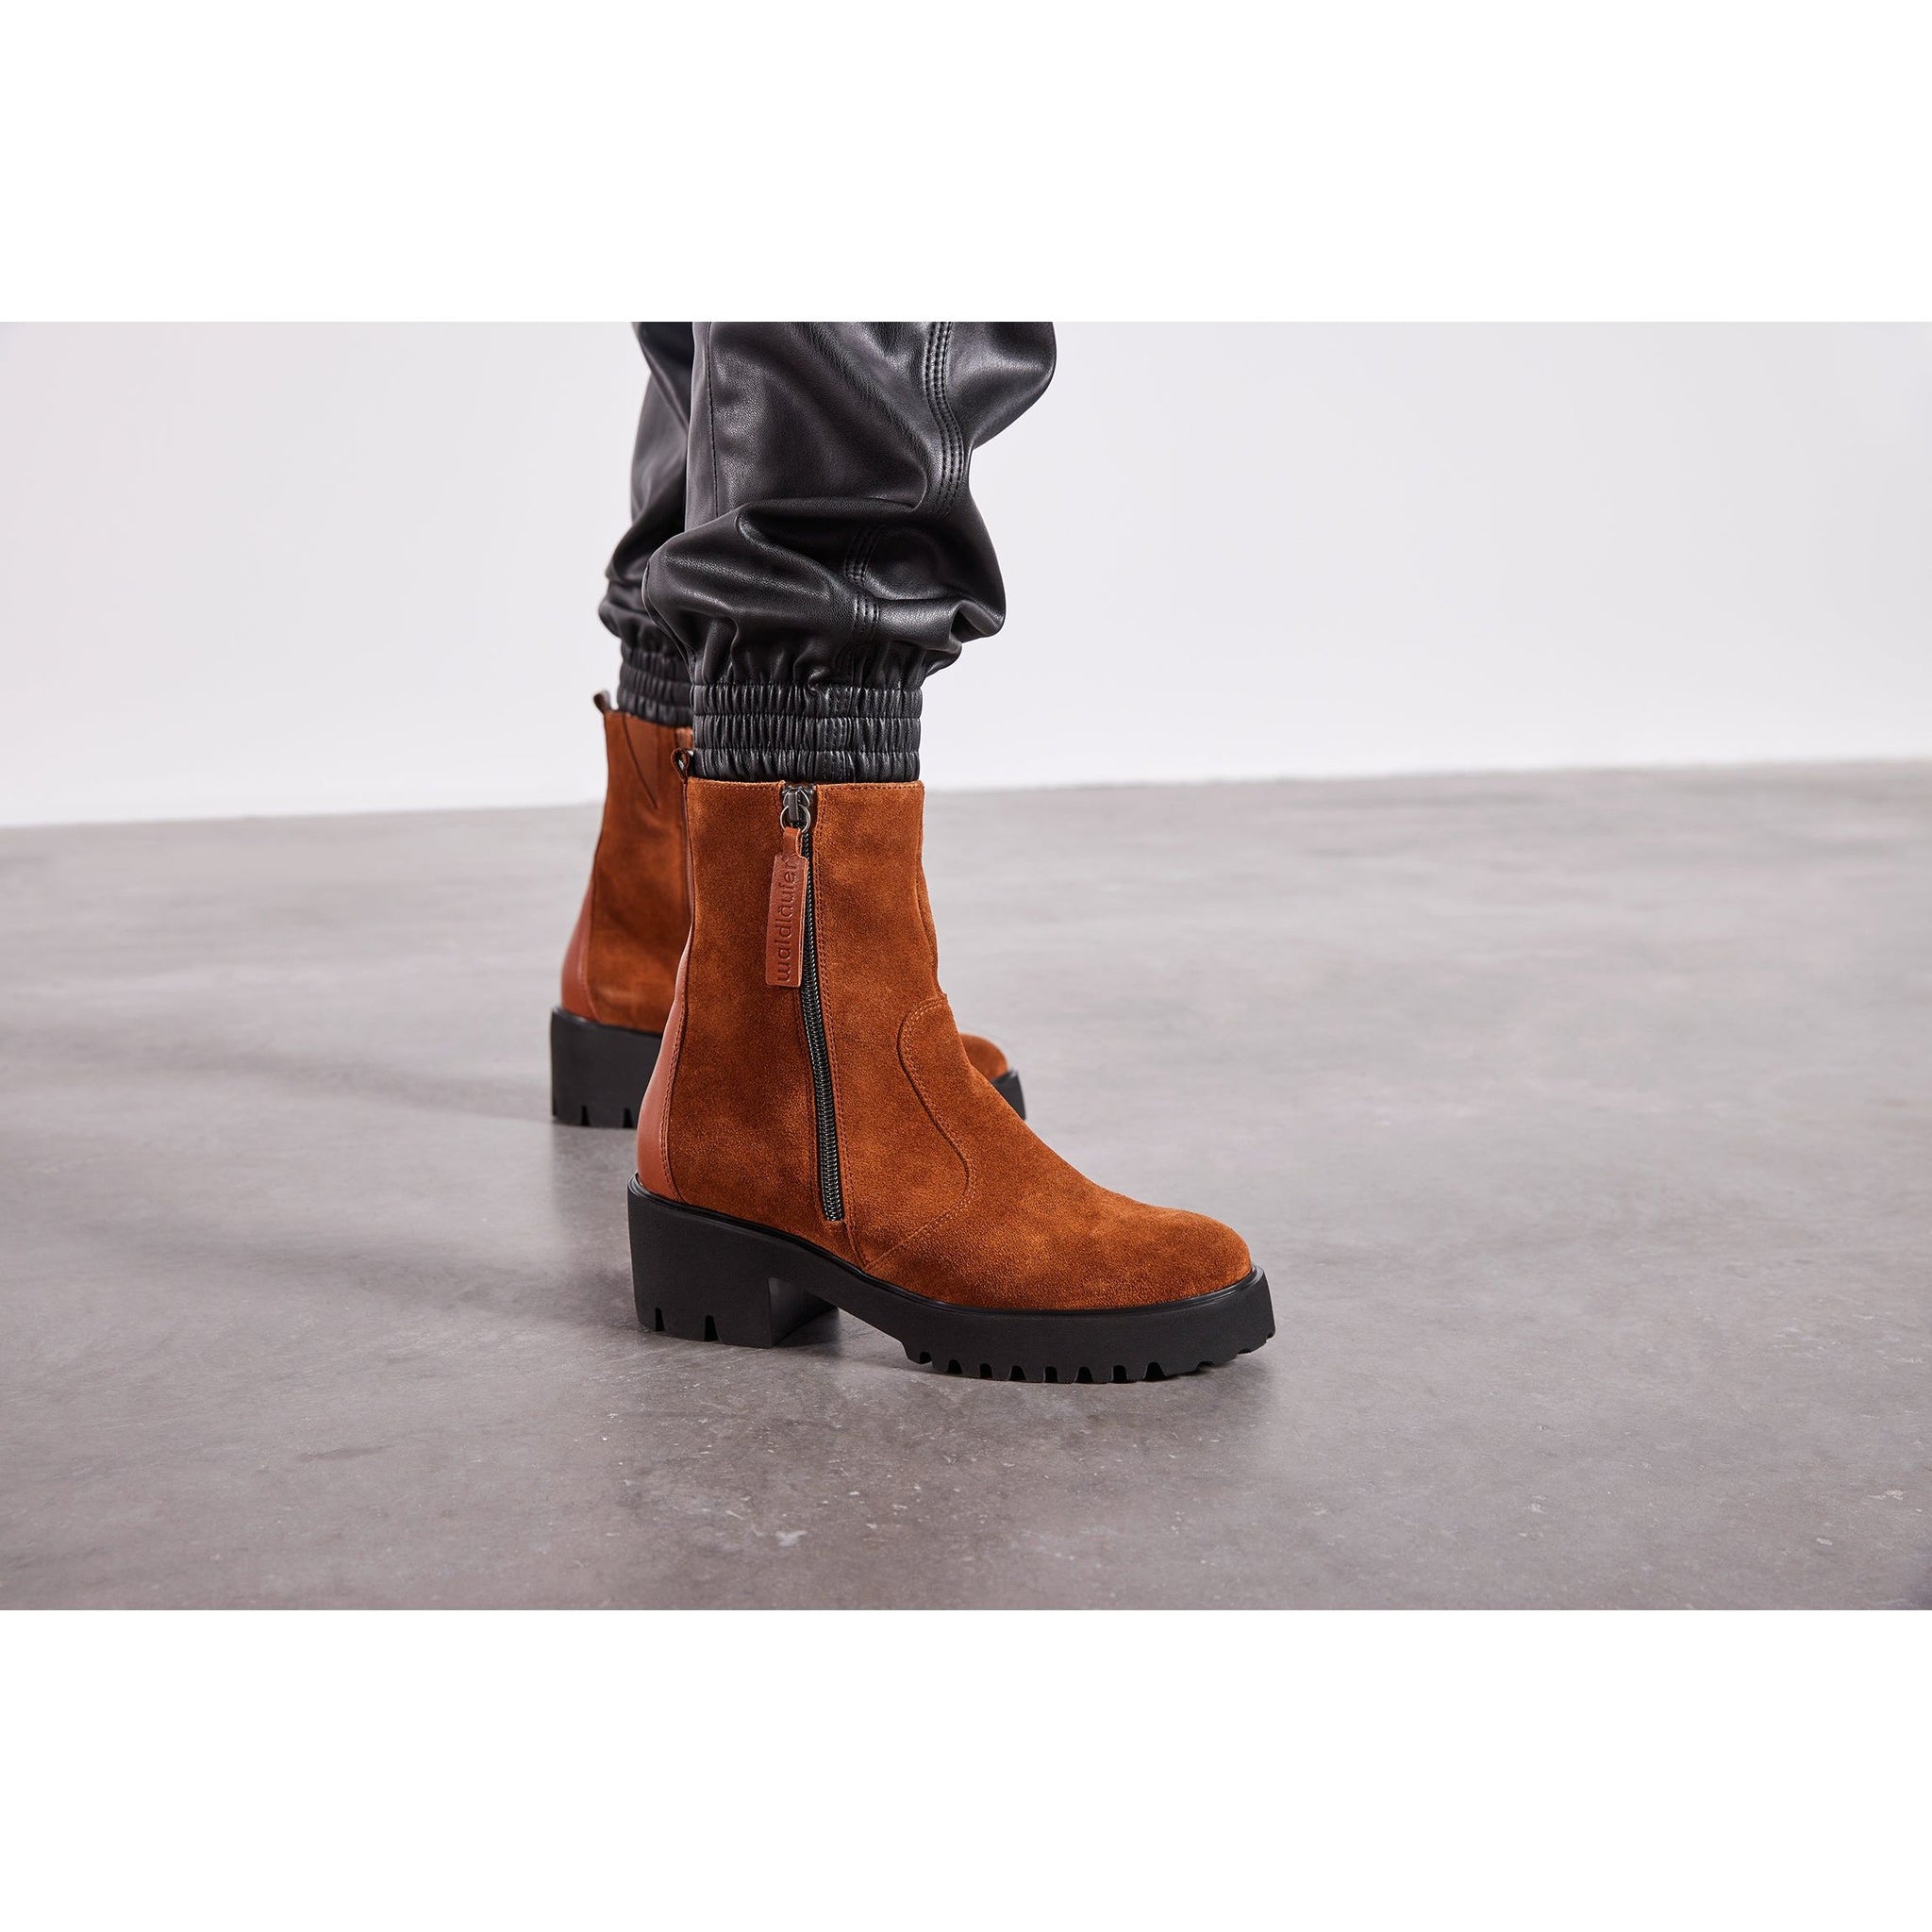 Waldlaufer H-Nira (771830) - Ladies Ankle Boot in Cognac Suede | Waldlaufer | Wide Fit Shoes | Wisemans | Bantry | Shoe Shop | West Cork | Munster | Ireland